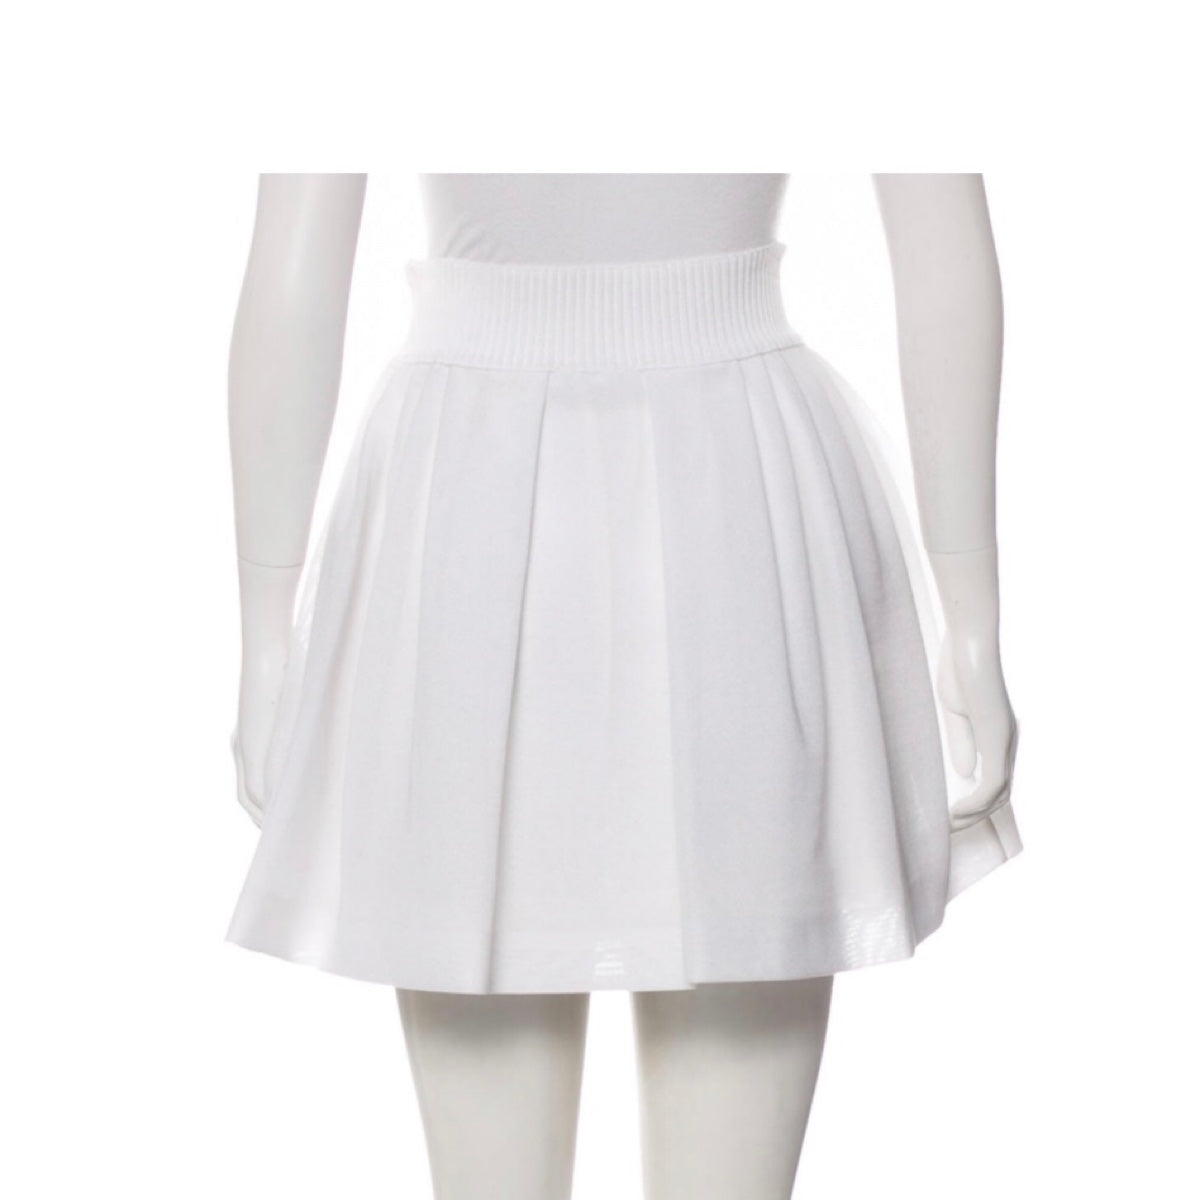 Chanel Knit Mini Skirt